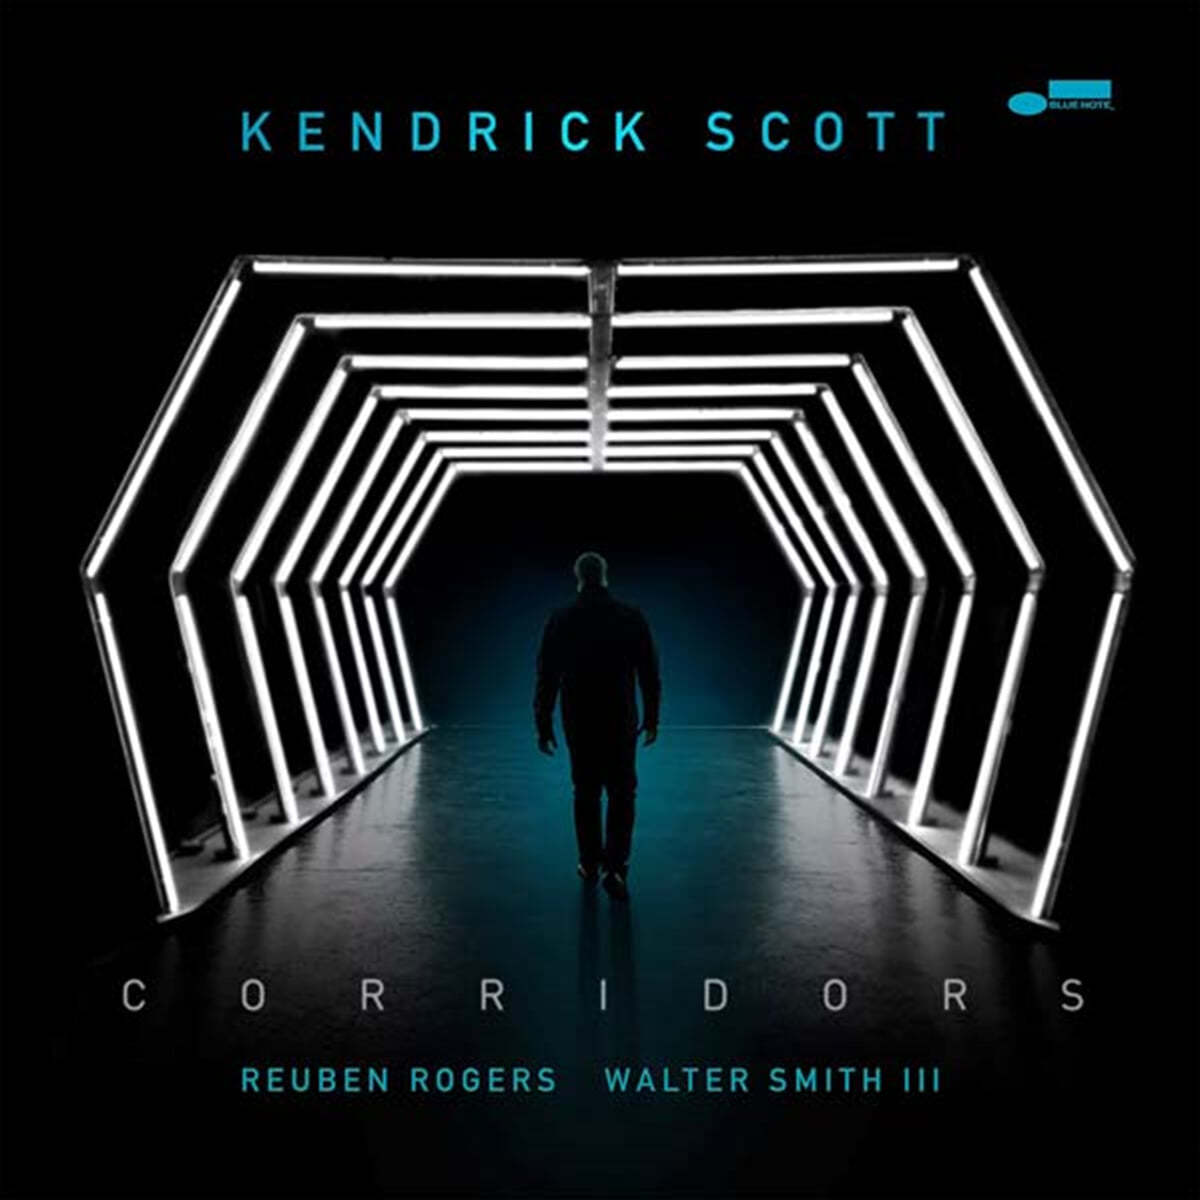 Kendrick Scott (켄드릭 스콧) - Corridors